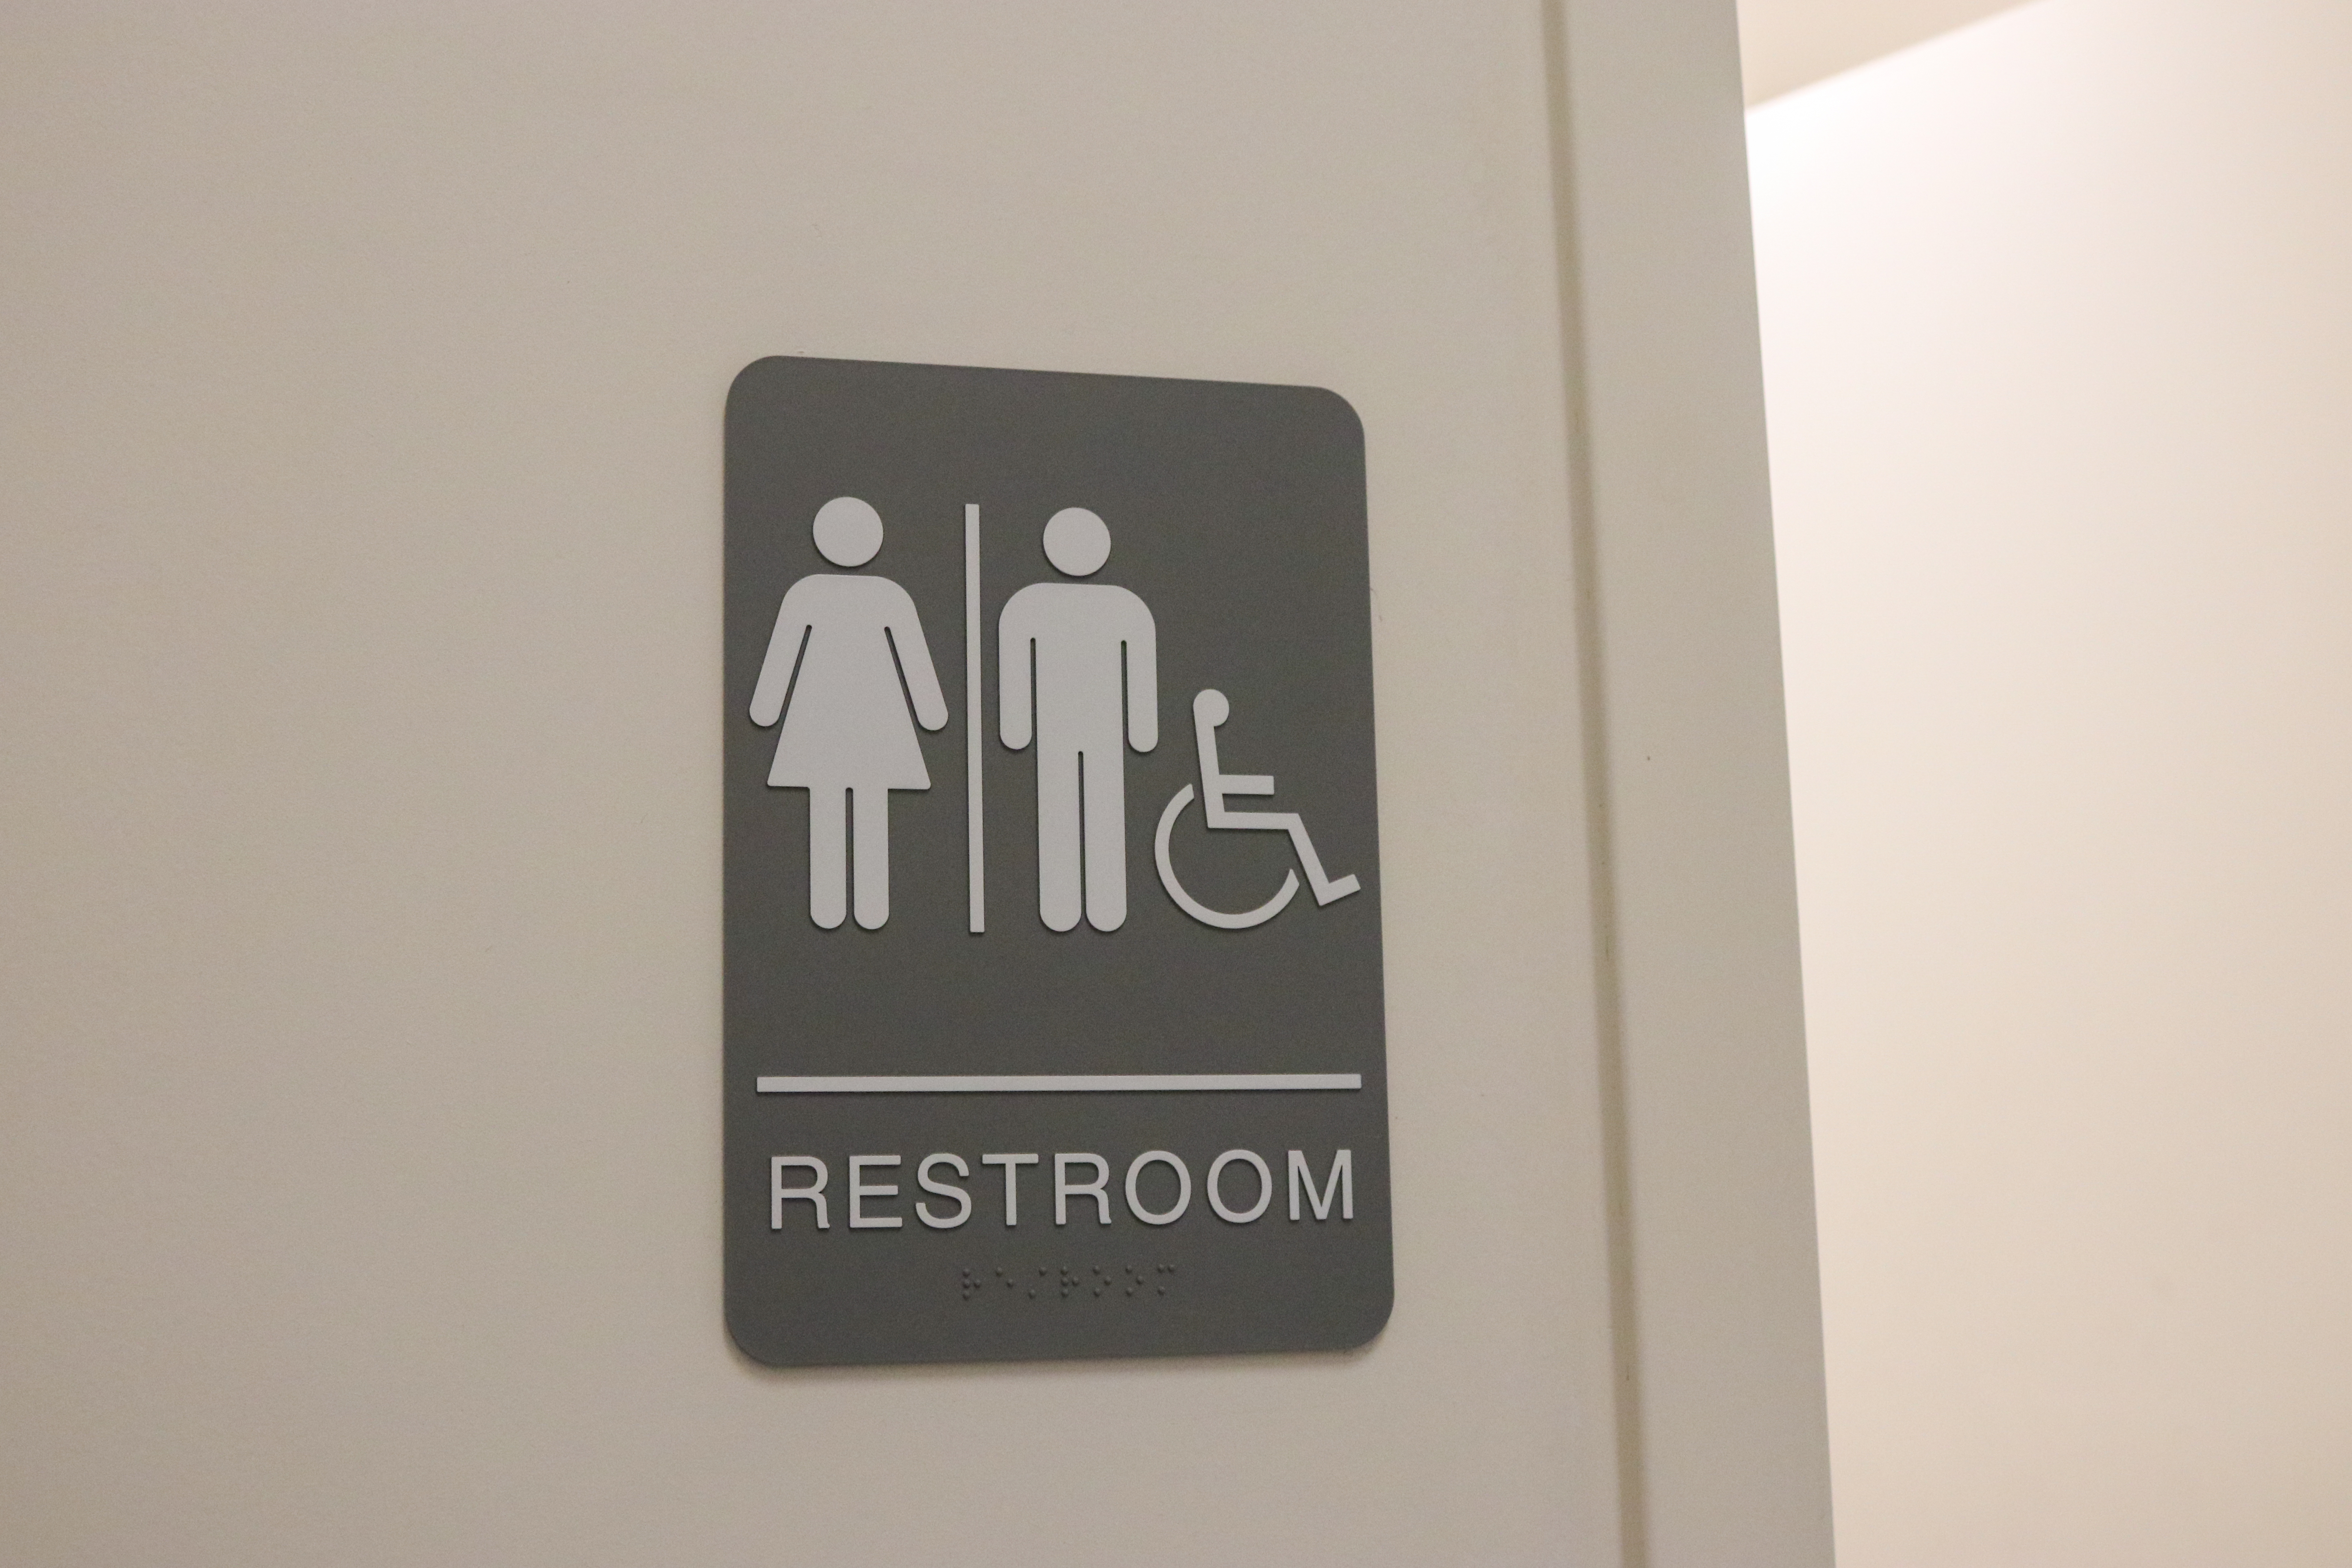 Bathroom breakdown: Where are the gender-inclusive restrooms?